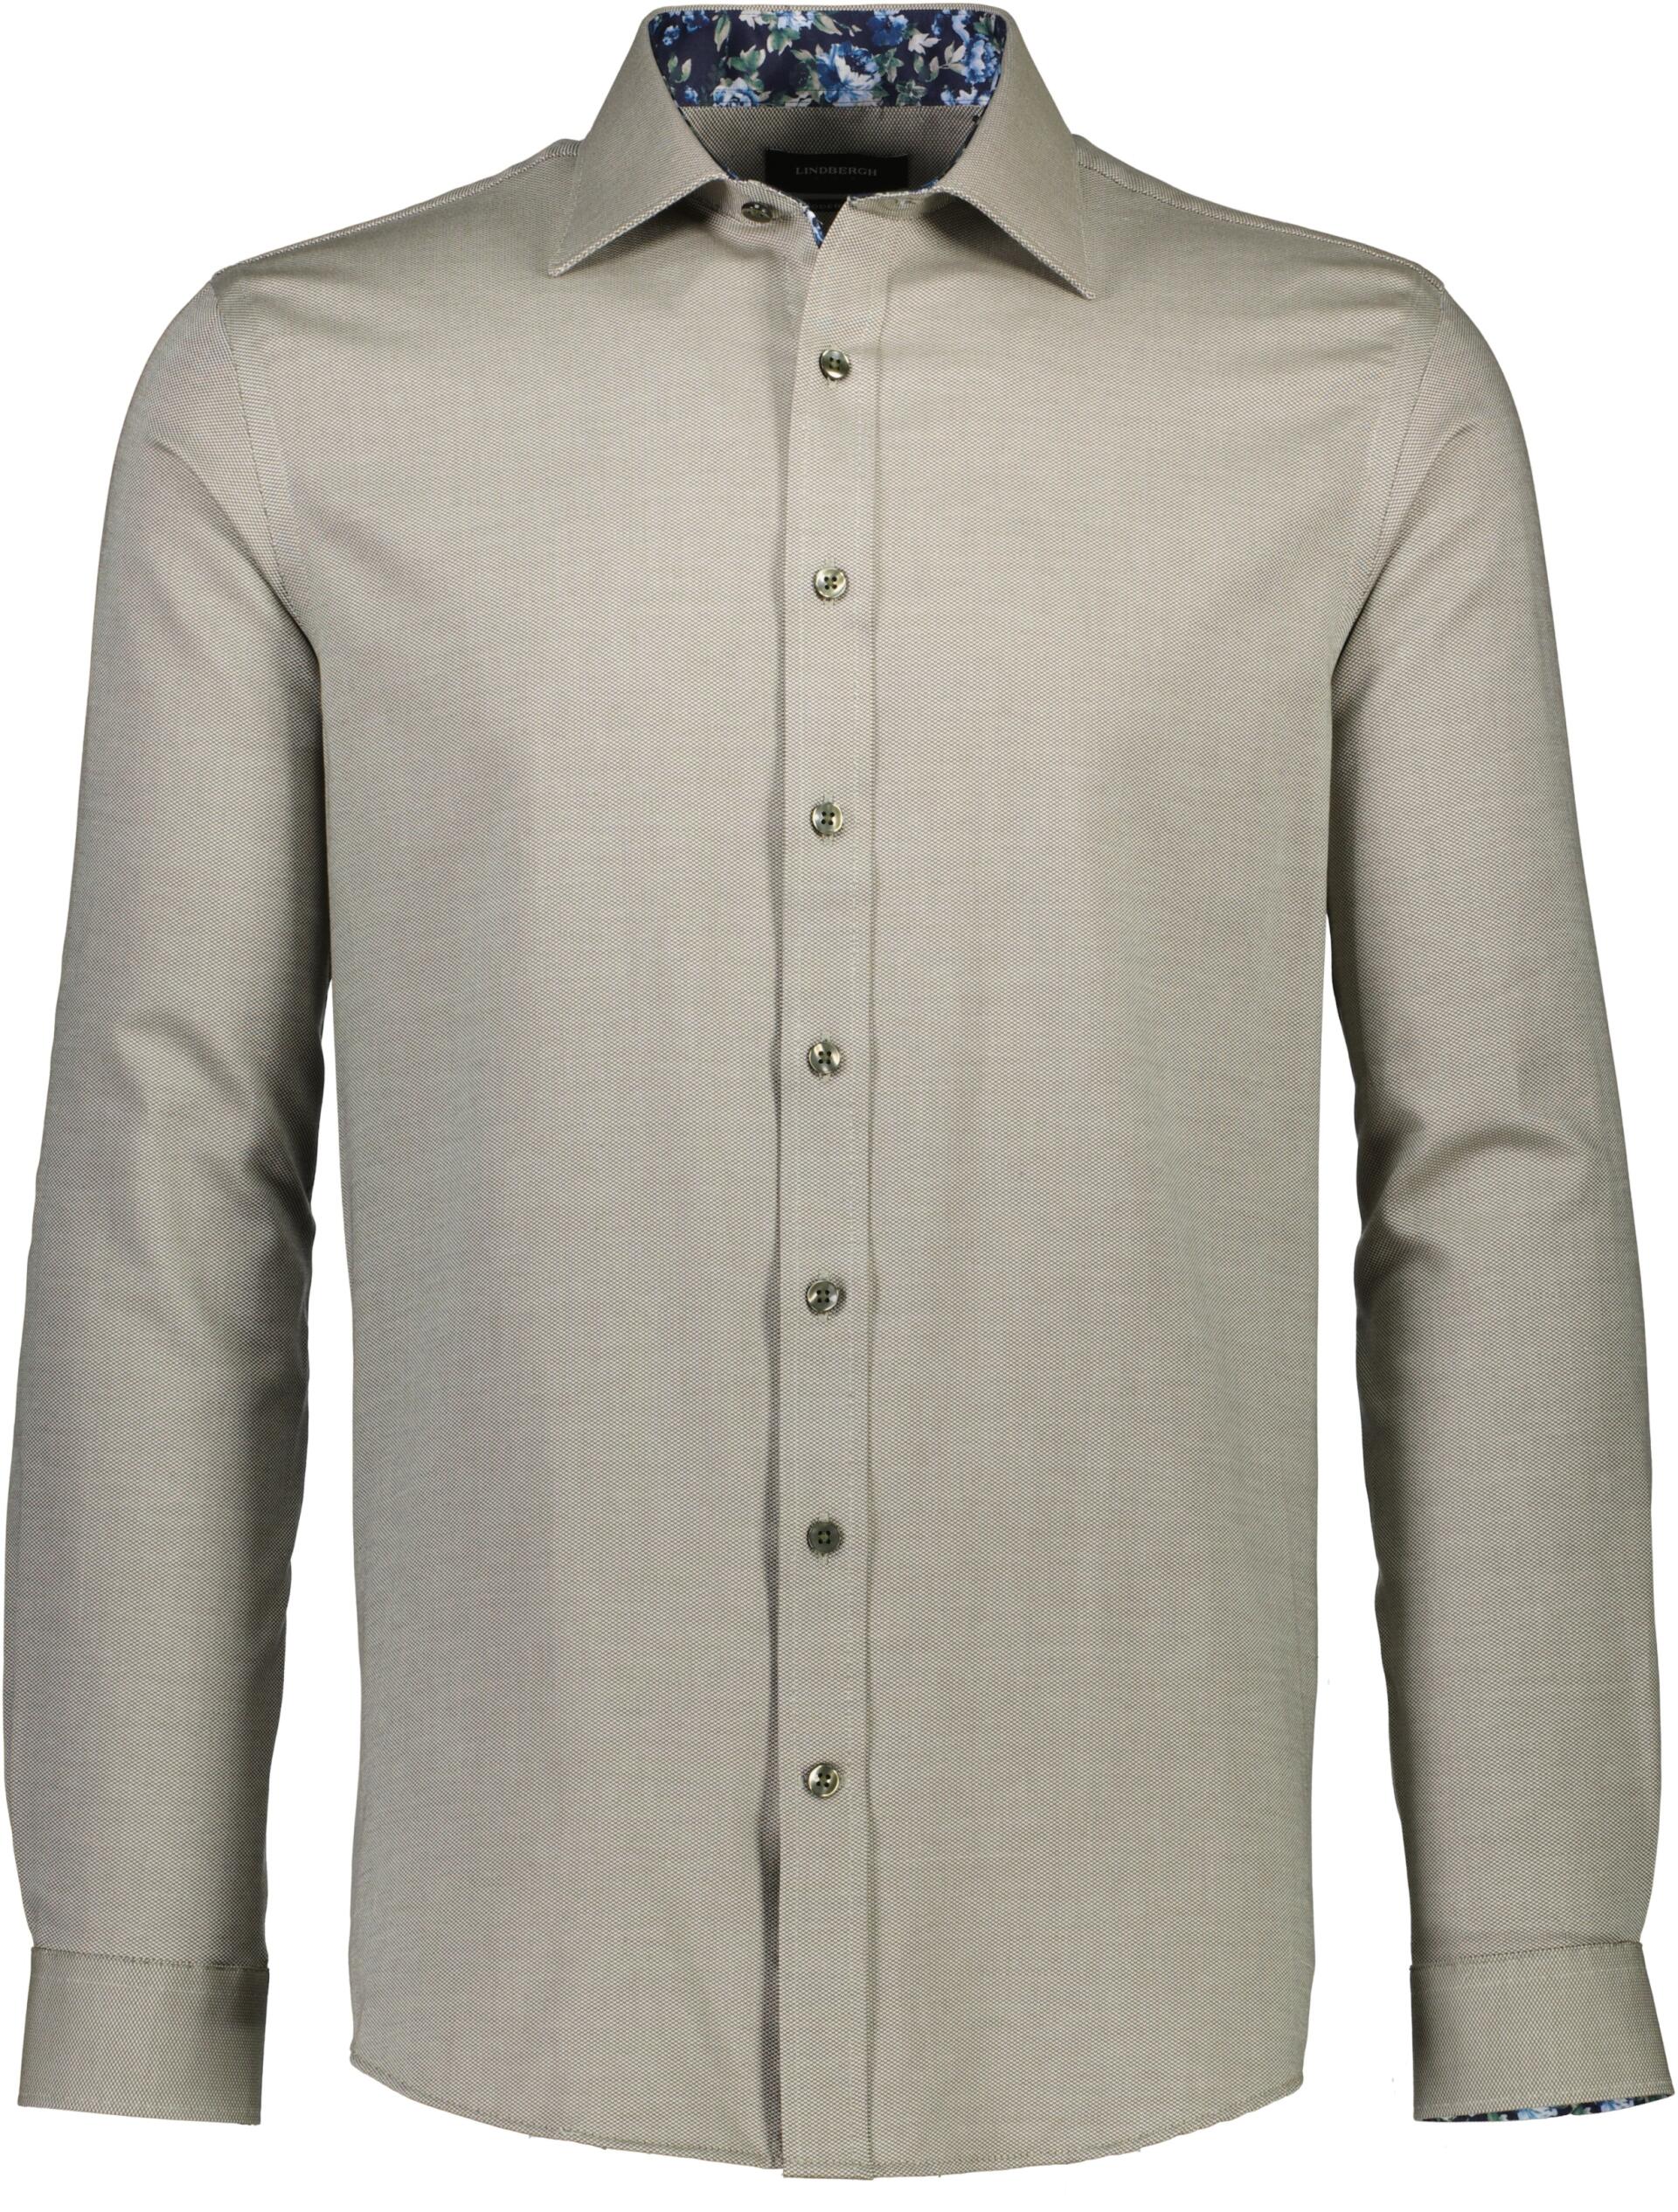 Business casual shirt 30-242152